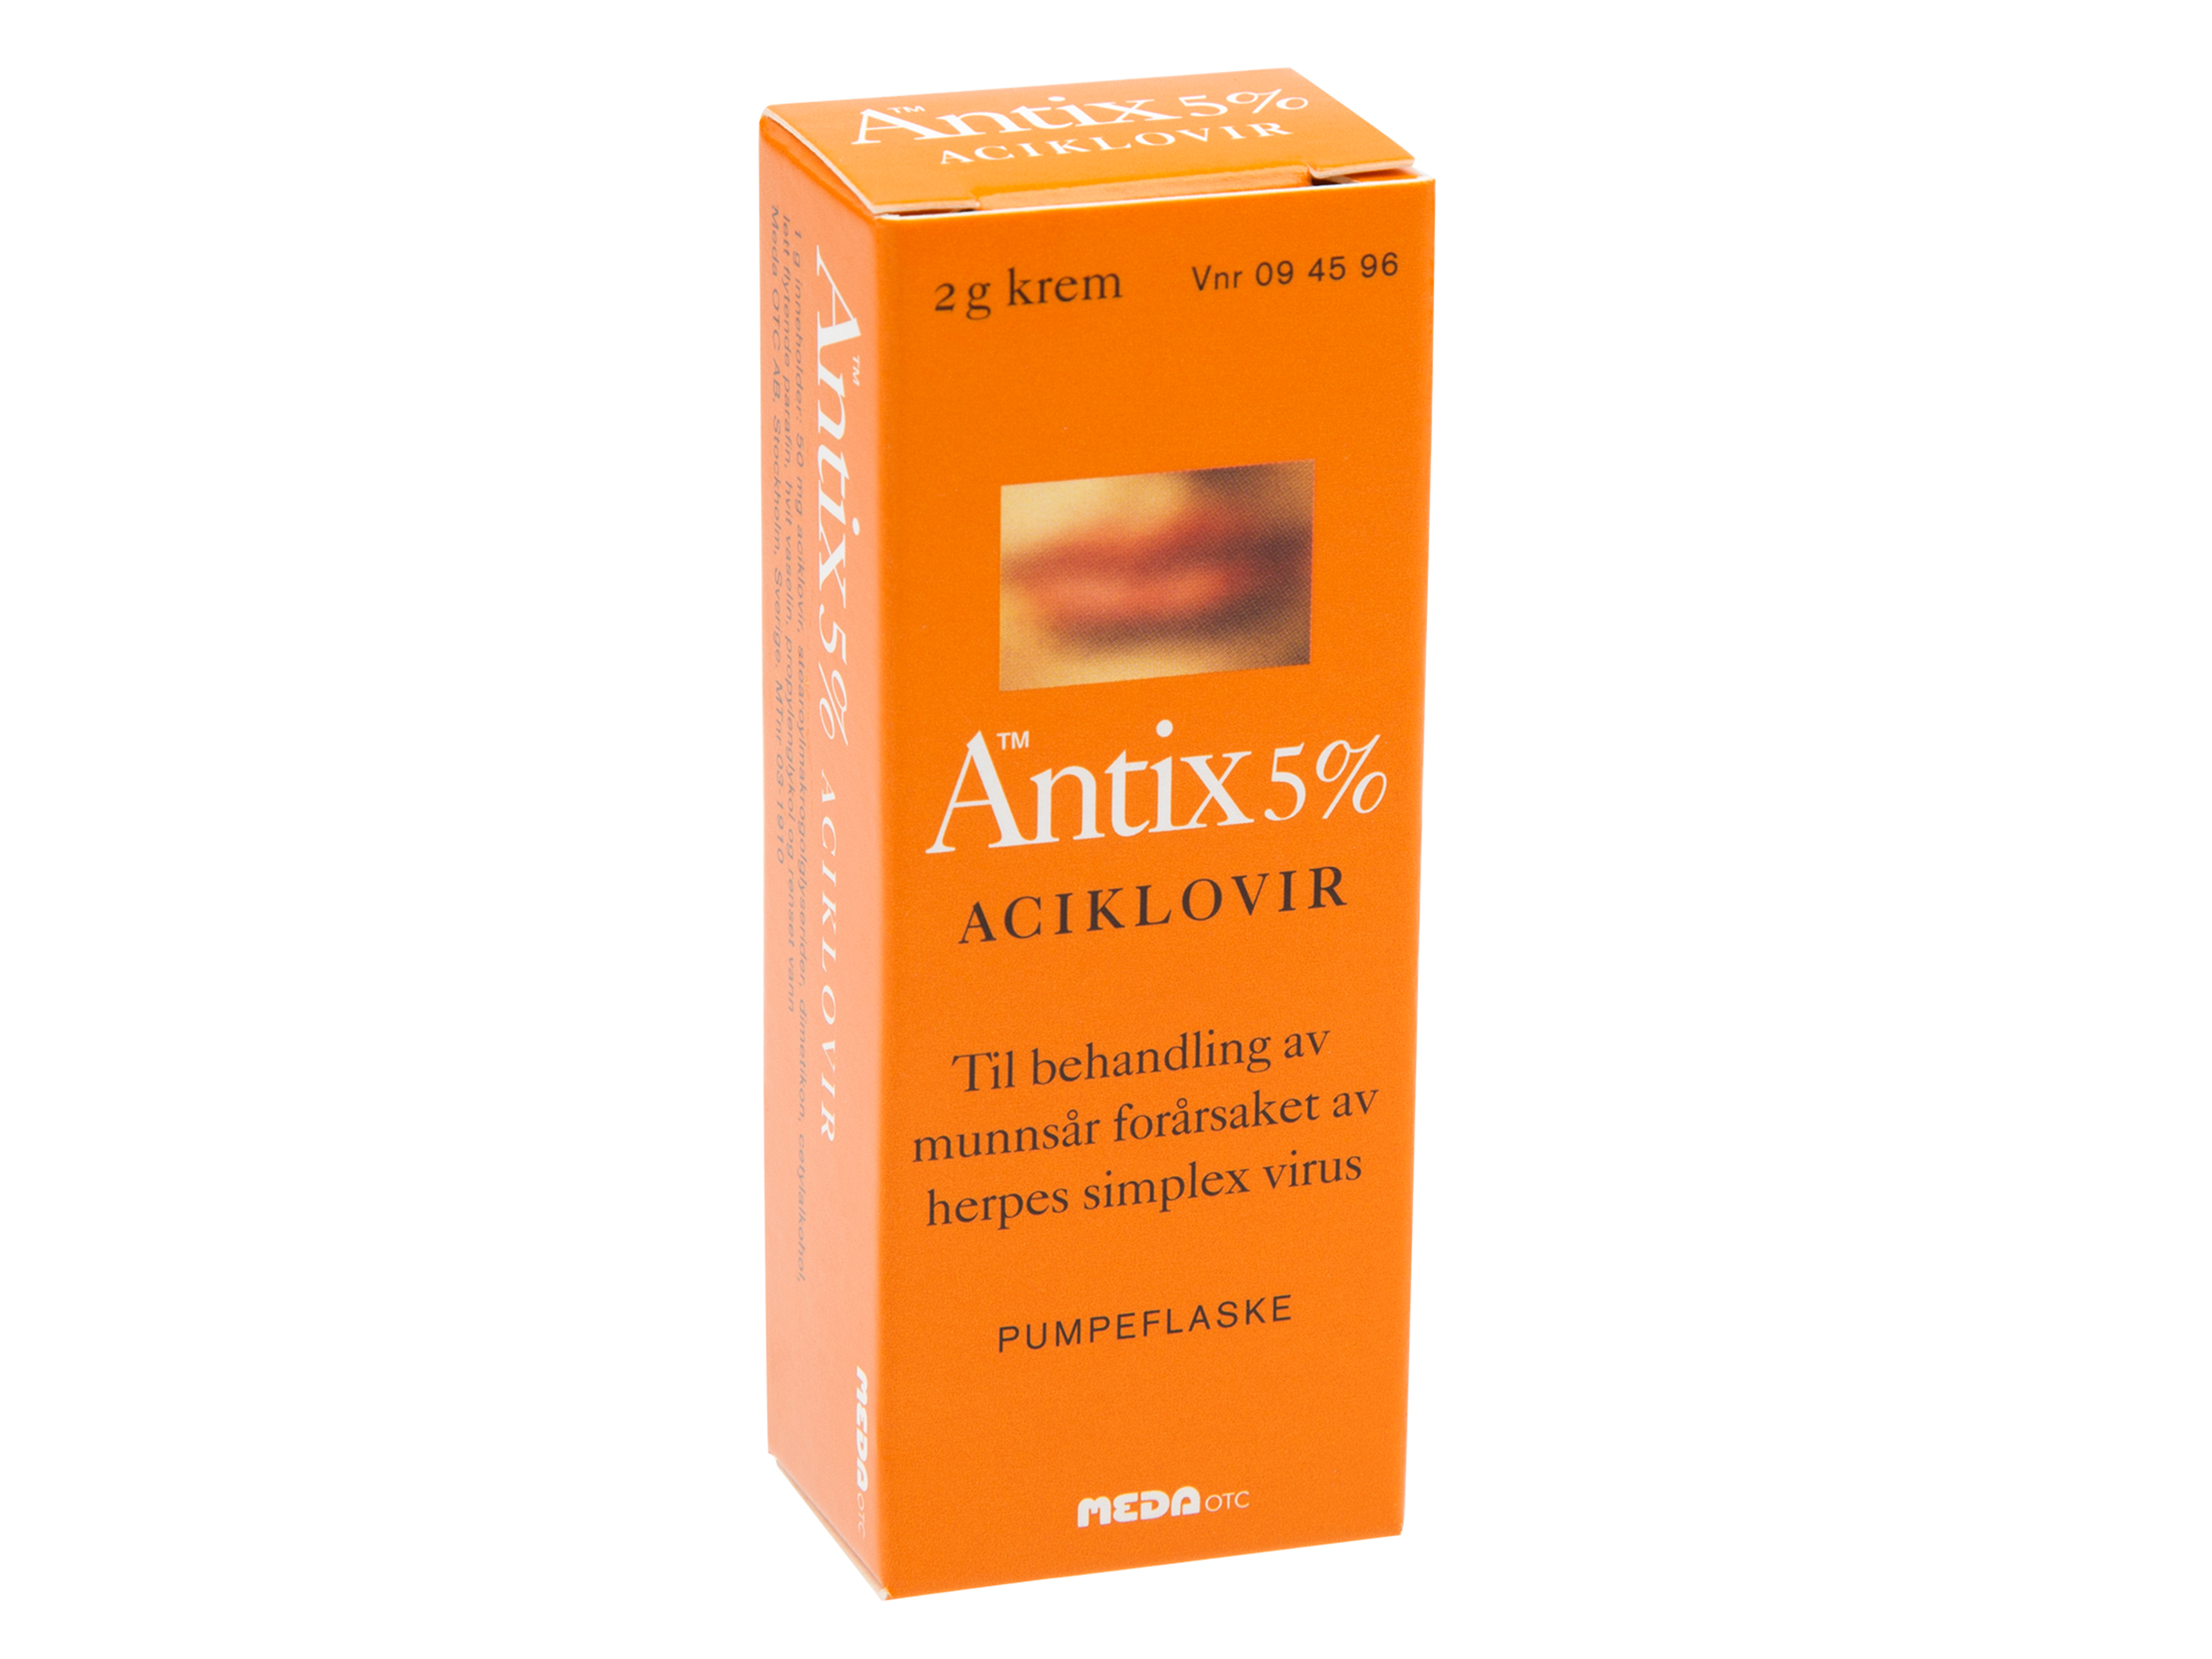 Antix Krem 5% pumpeflaske, 2 g.